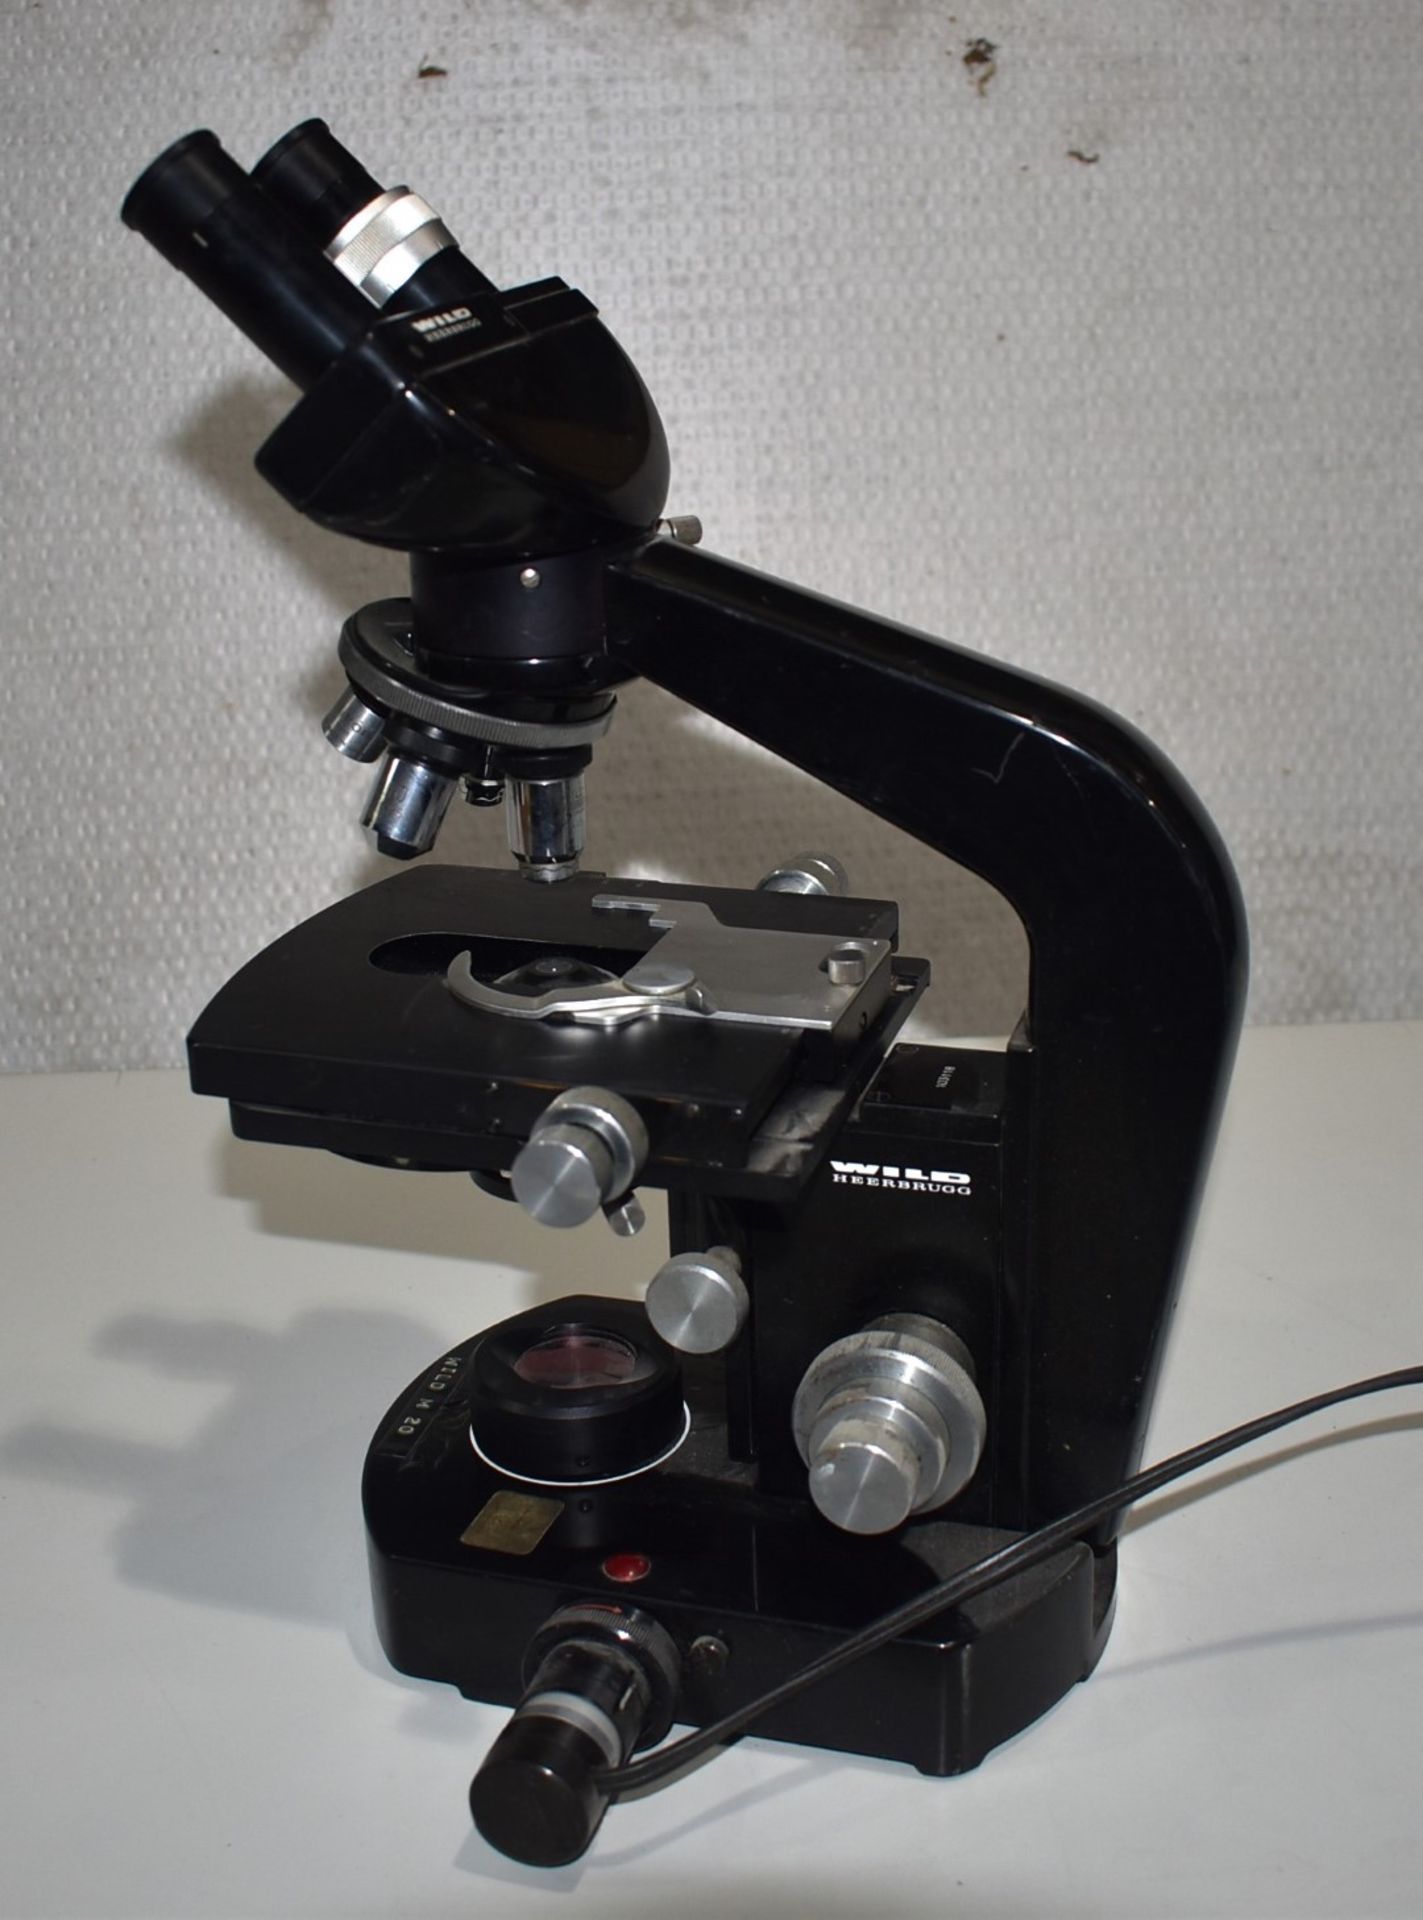 1 x Wild M20 Microscope CP163 - Image 13 of 22